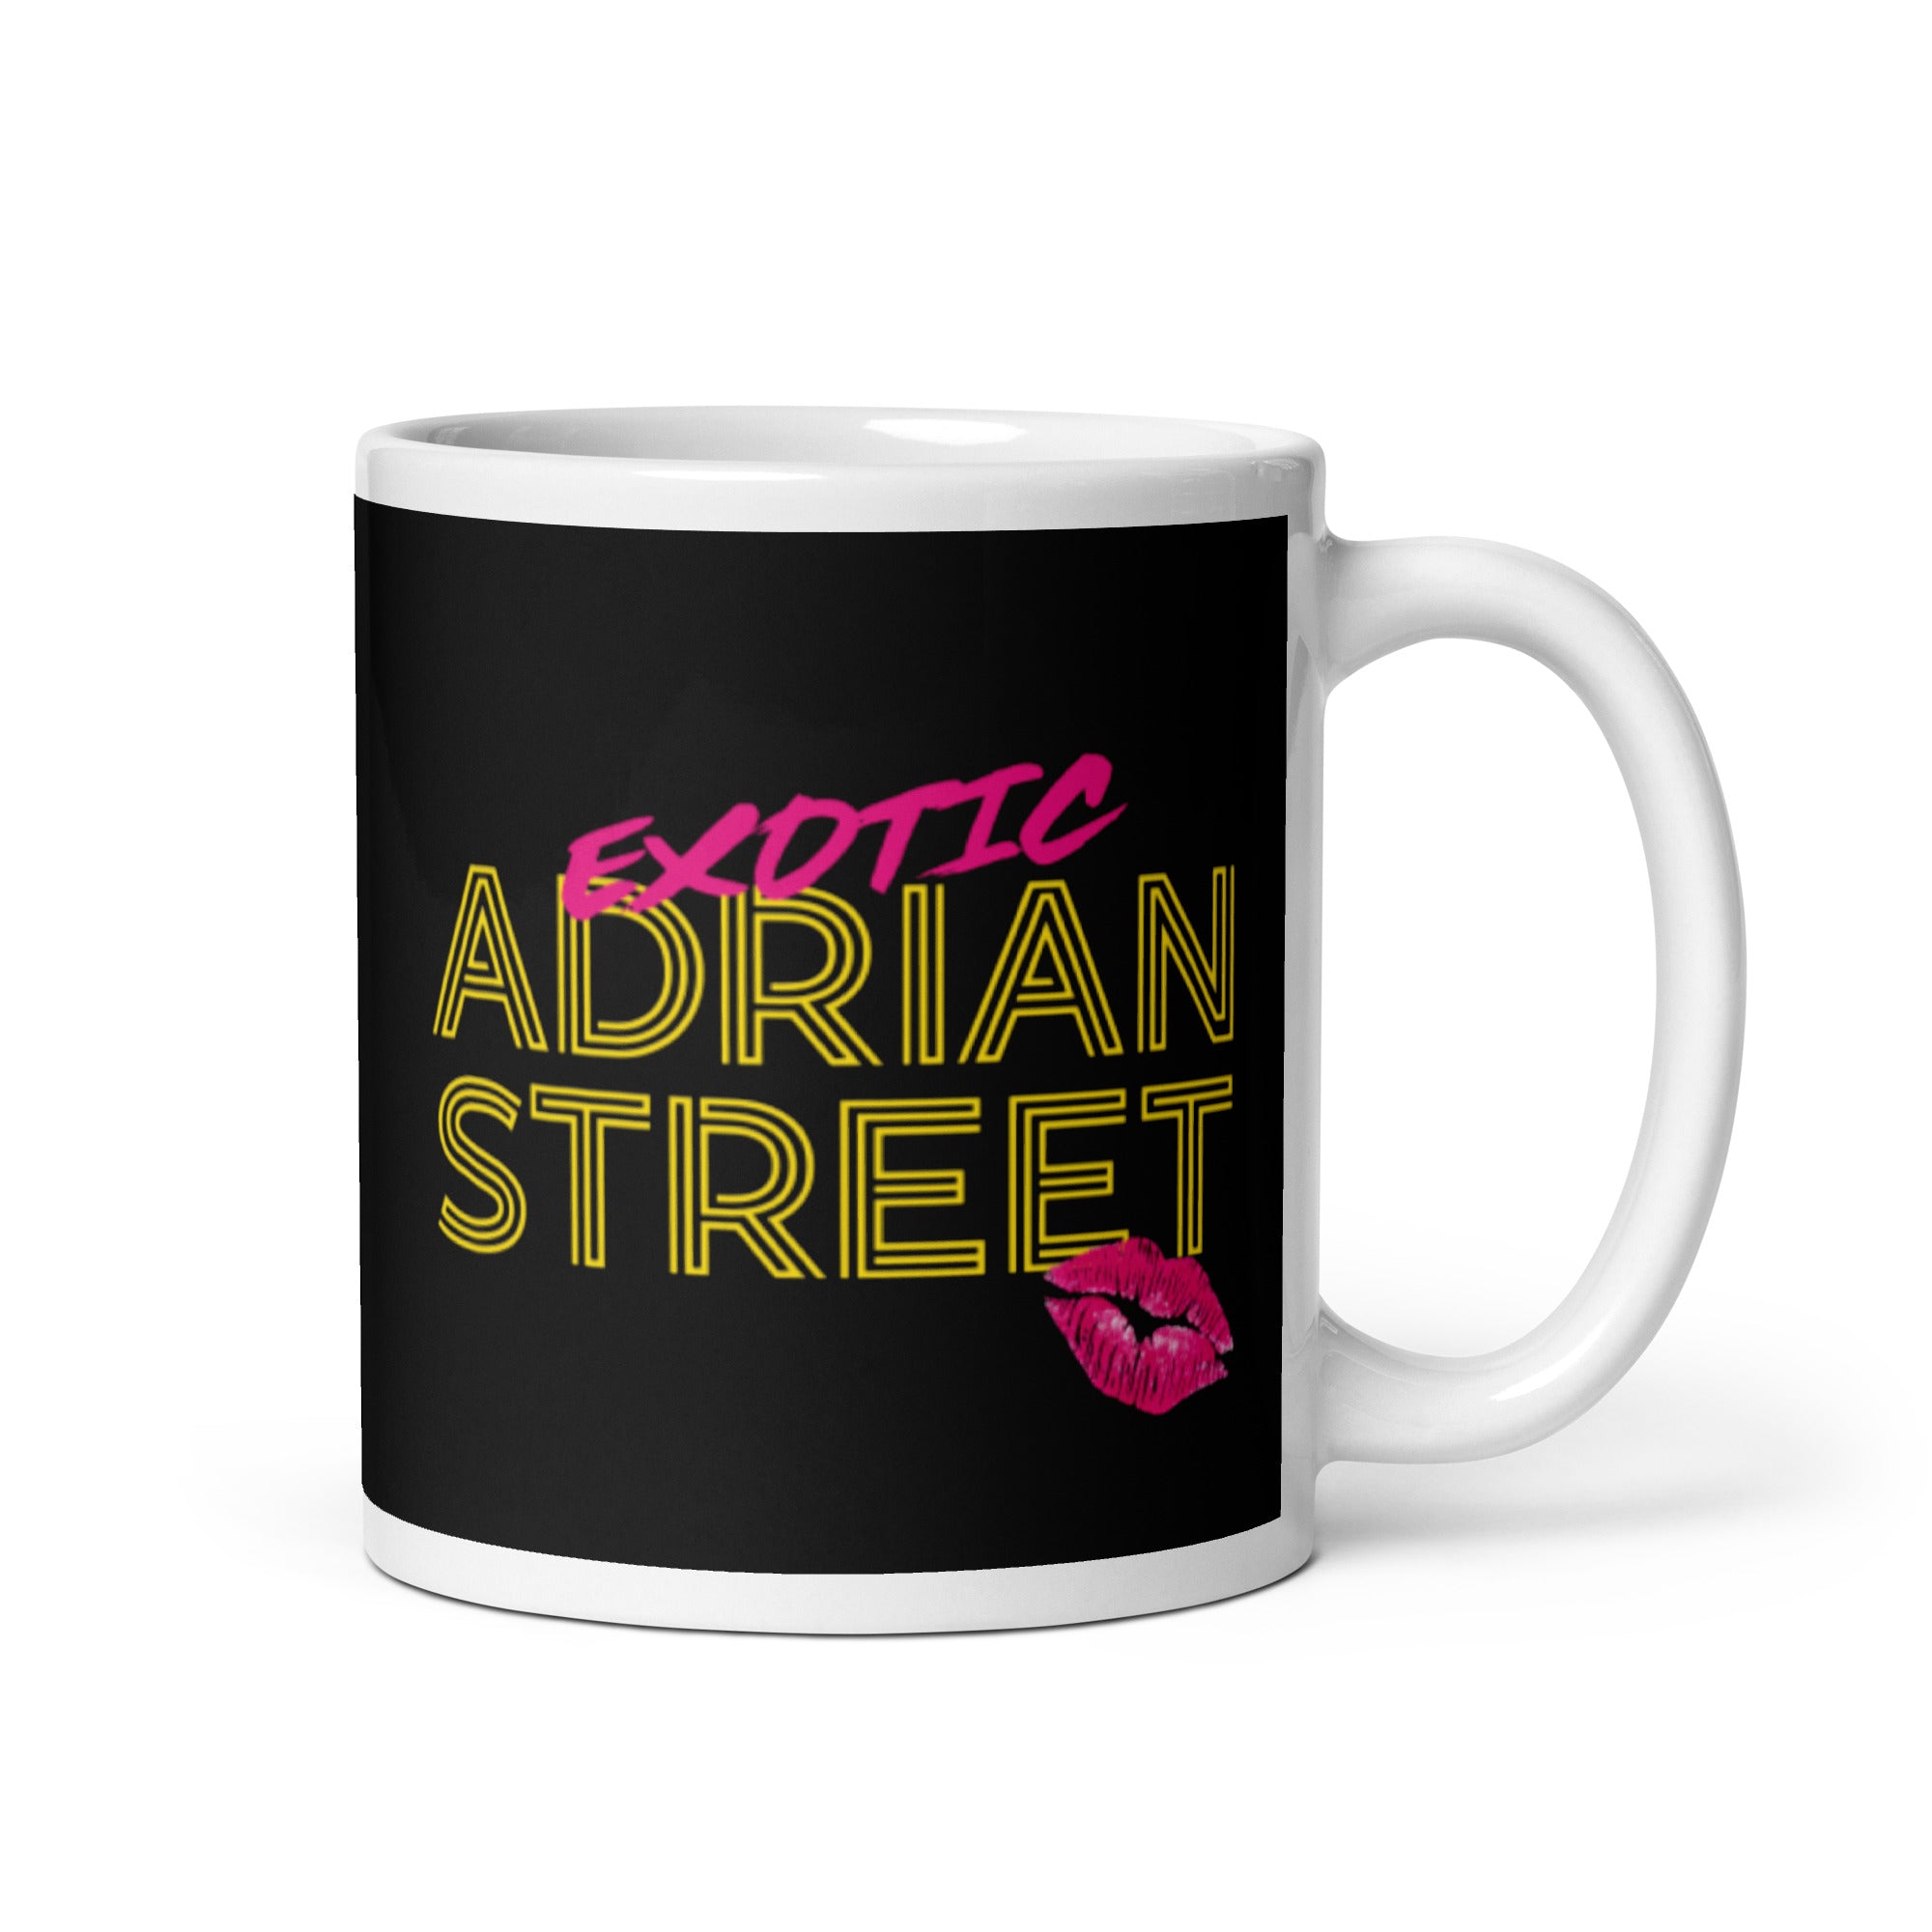 Adrian Street Logo White Glossy Mug